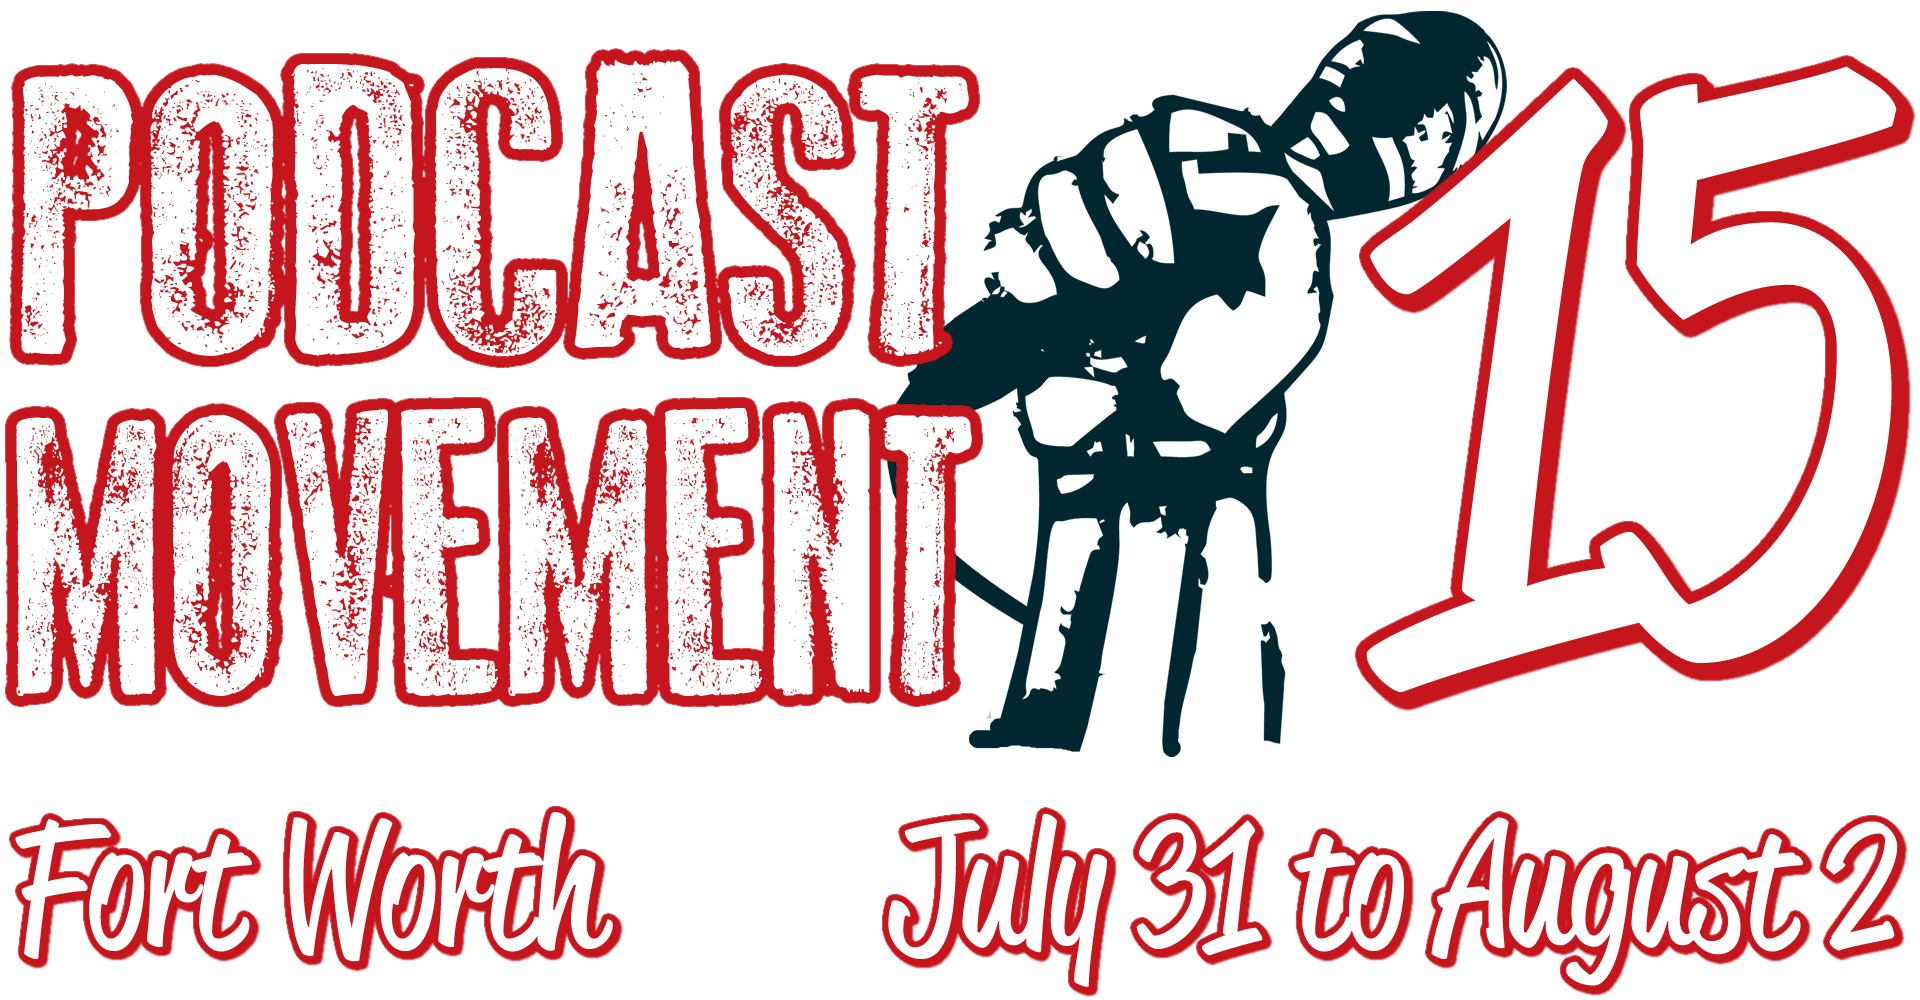 Podcast Movement 2015